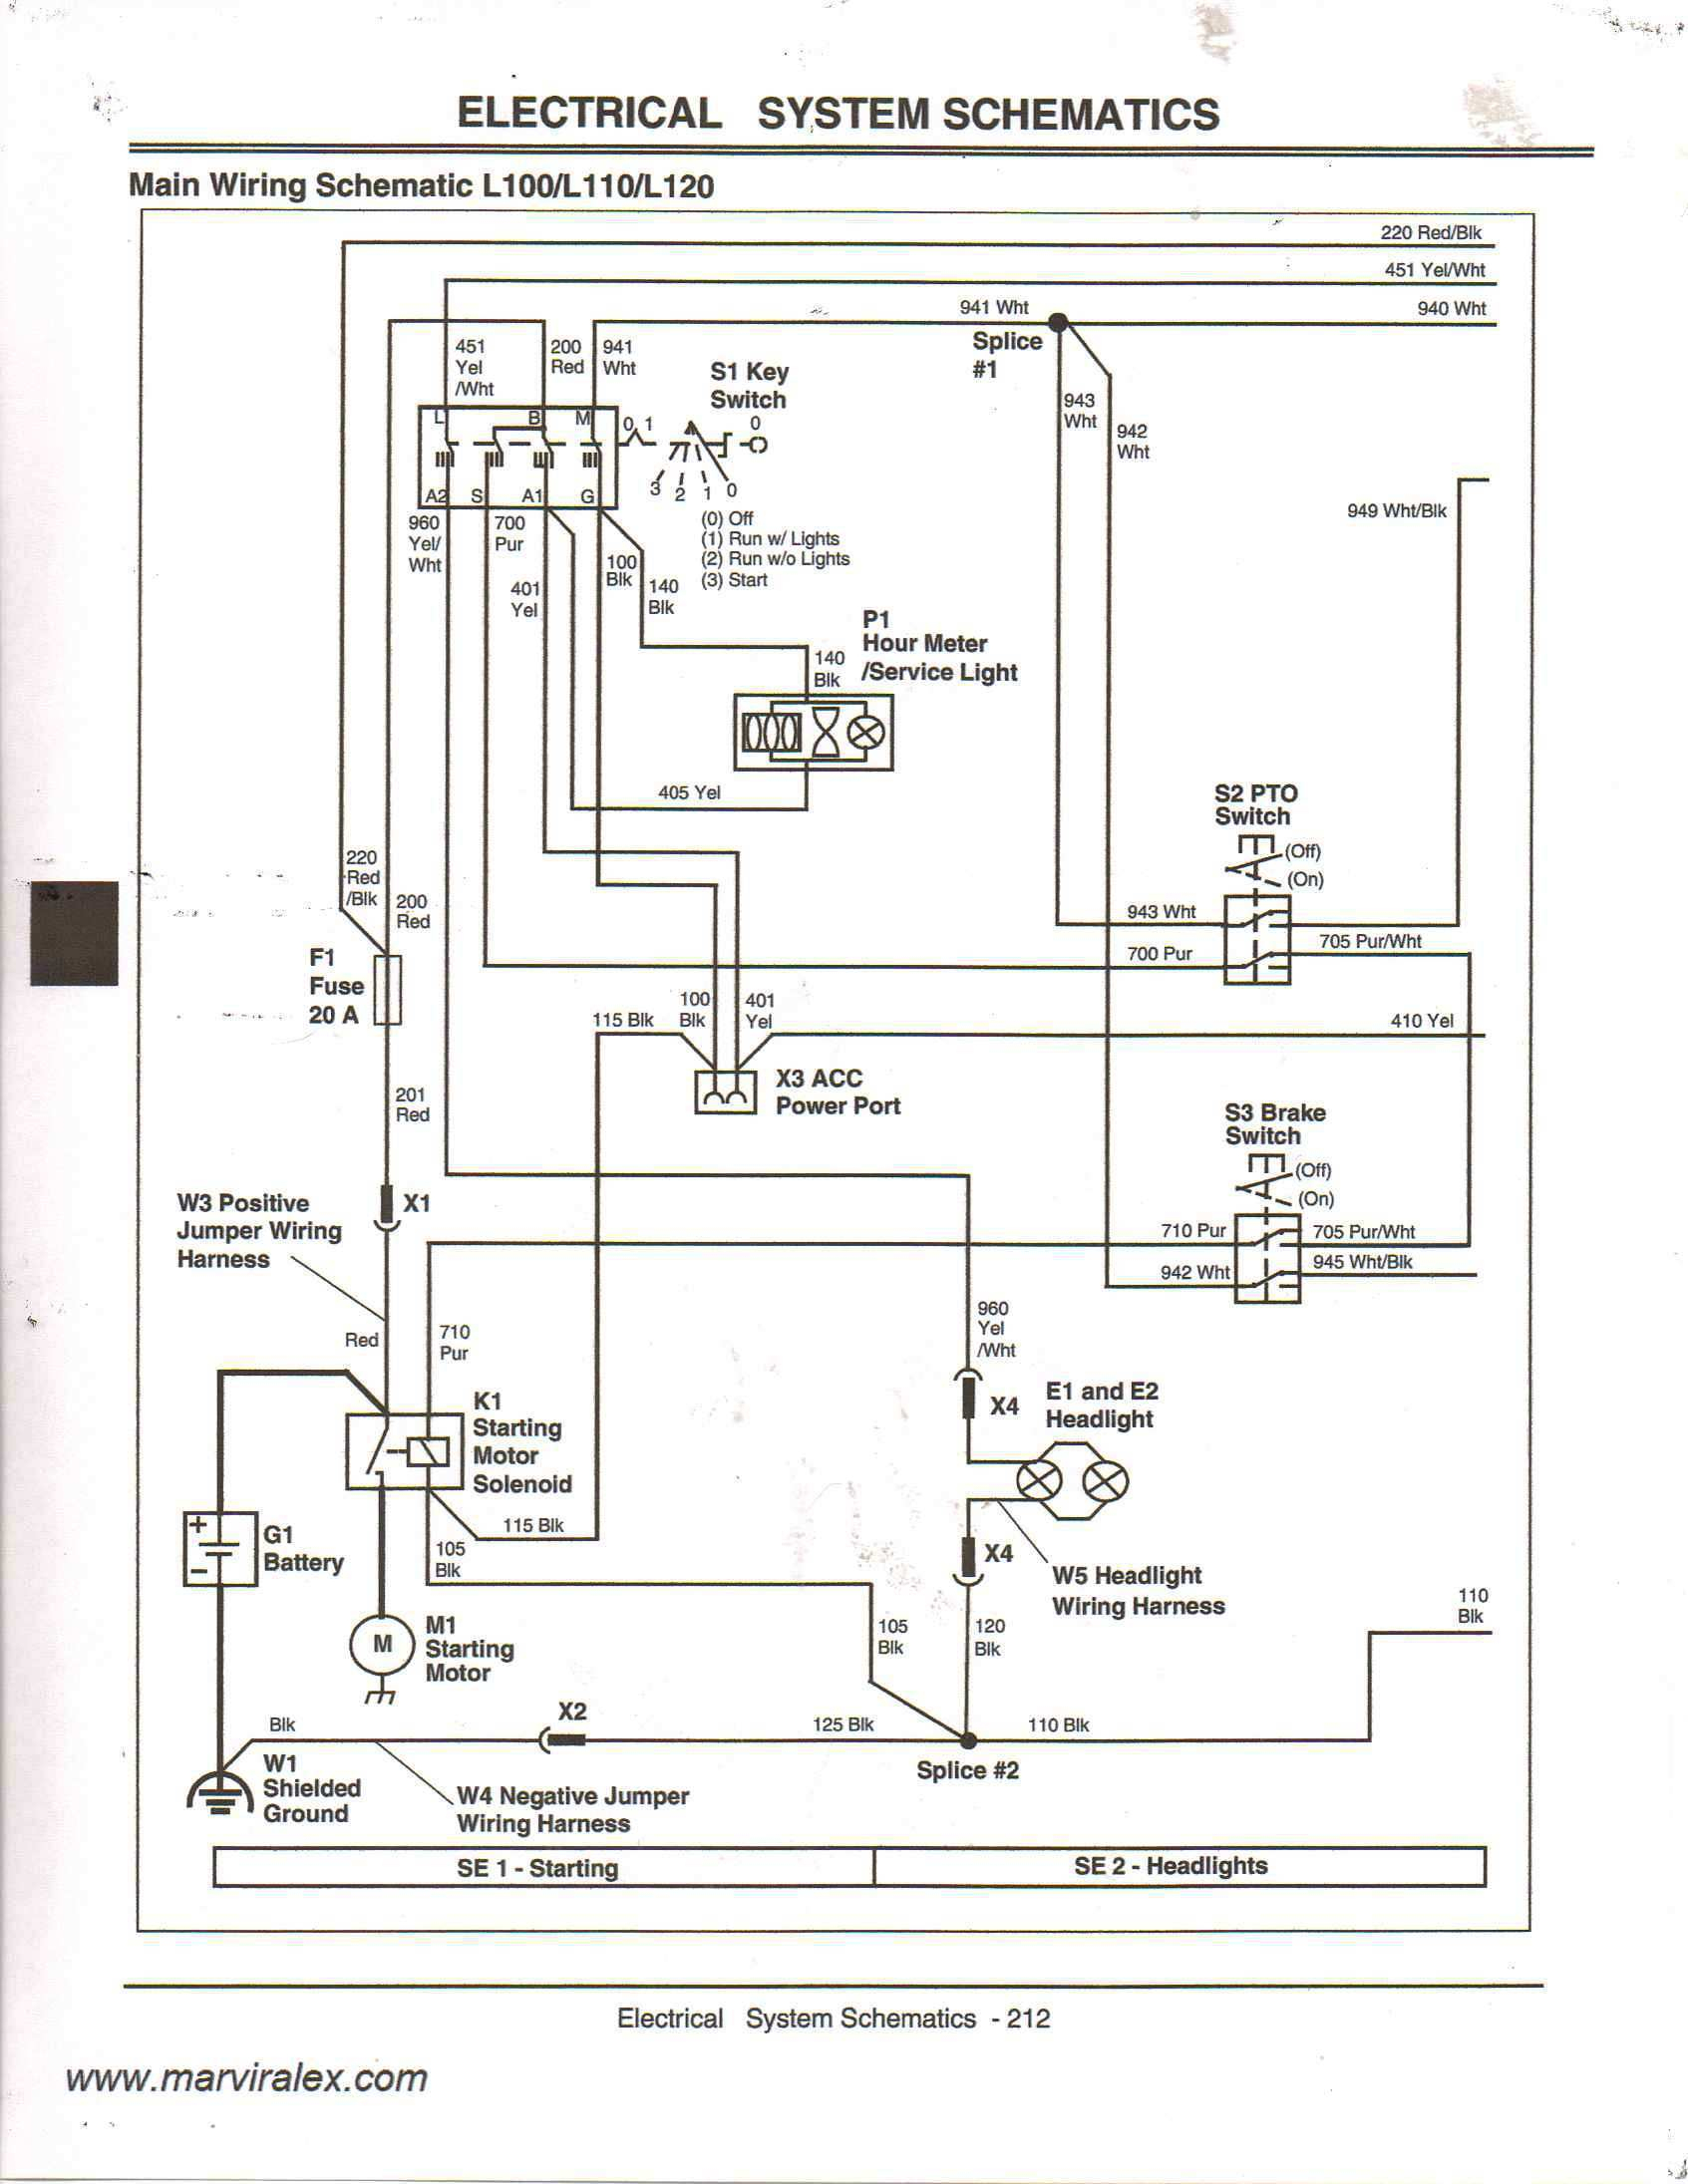 John Deere Fuse Box | Wiring Diagram - John Deere Wiring Diagram